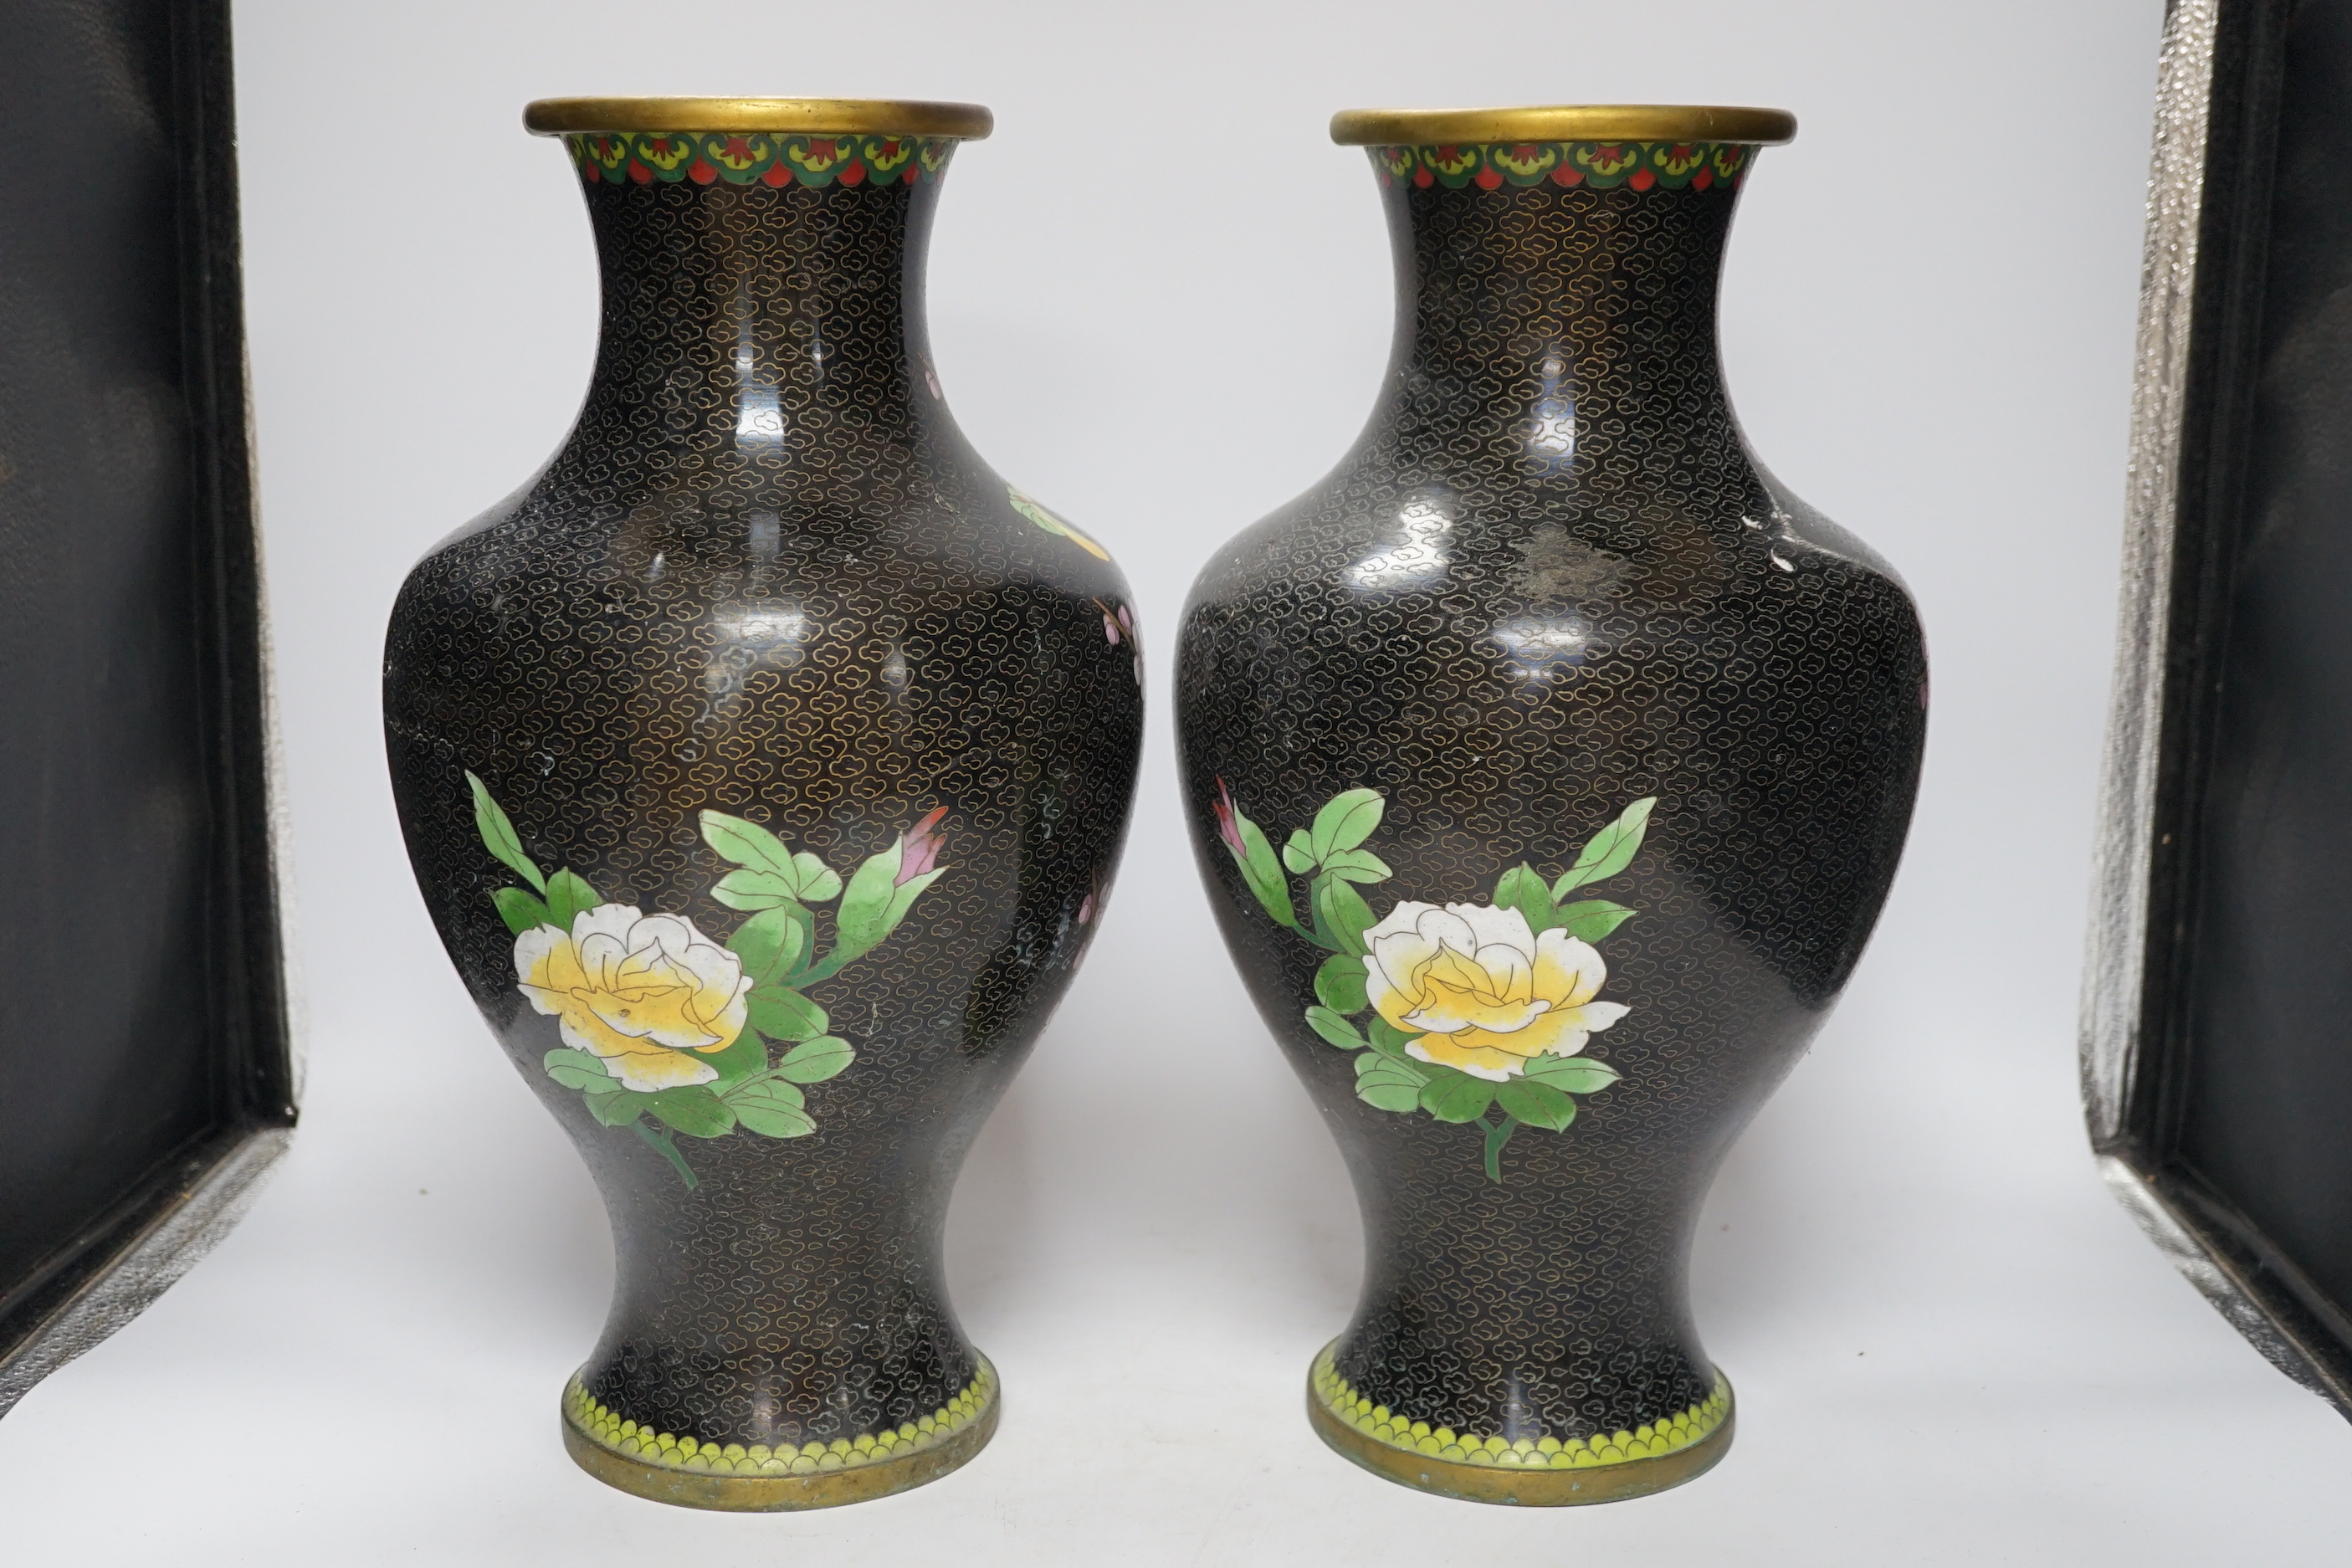 A pair of large Chinese cloisonné enamel vases, 39cm